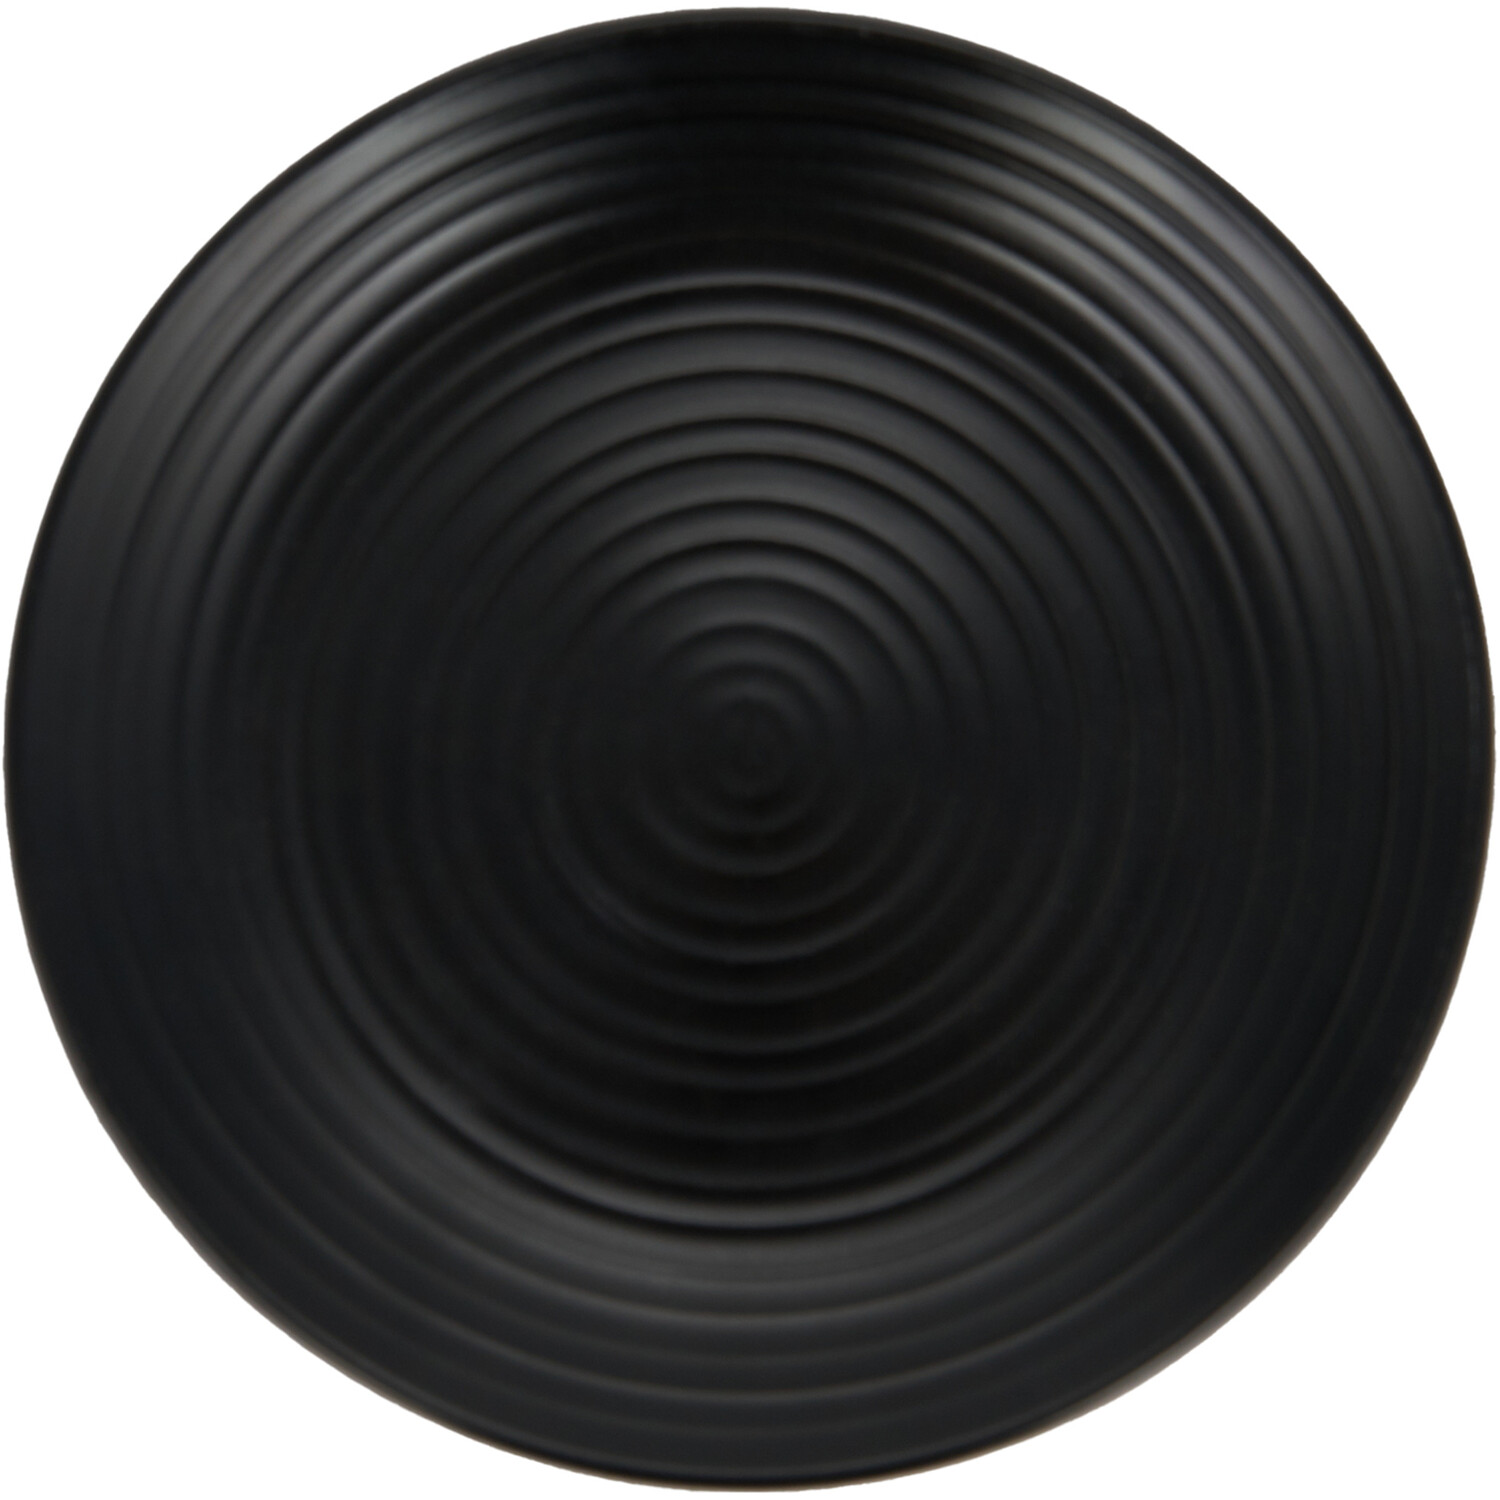 Nera Ribbed Side Plate - Black Image 1